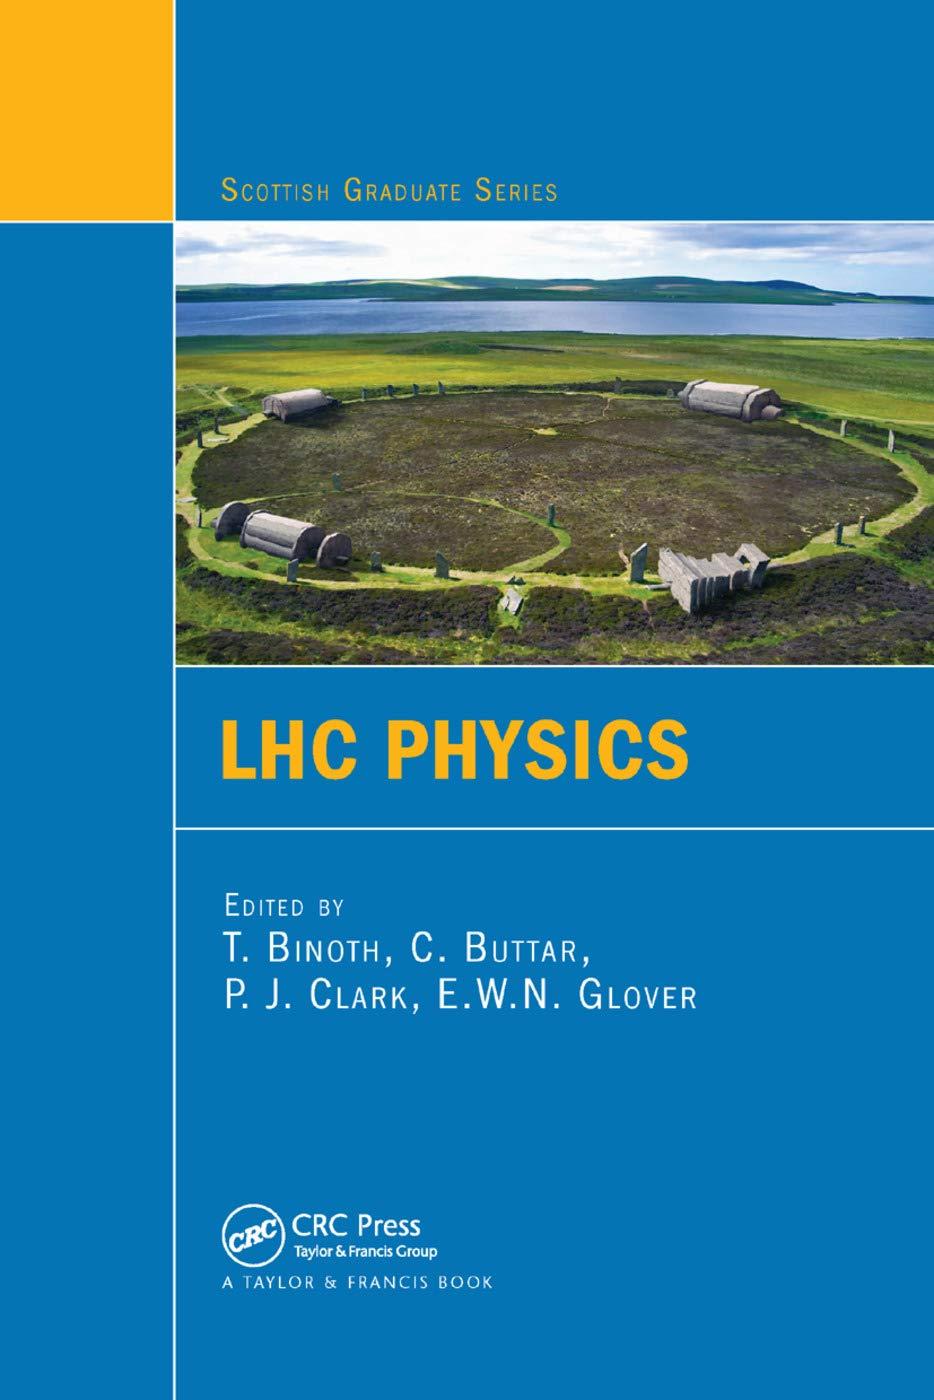 lhc physics 1st edition t. binoth, c. buttar, p. j. clark, e.w.n. glover 036738146x, 978-0367381462